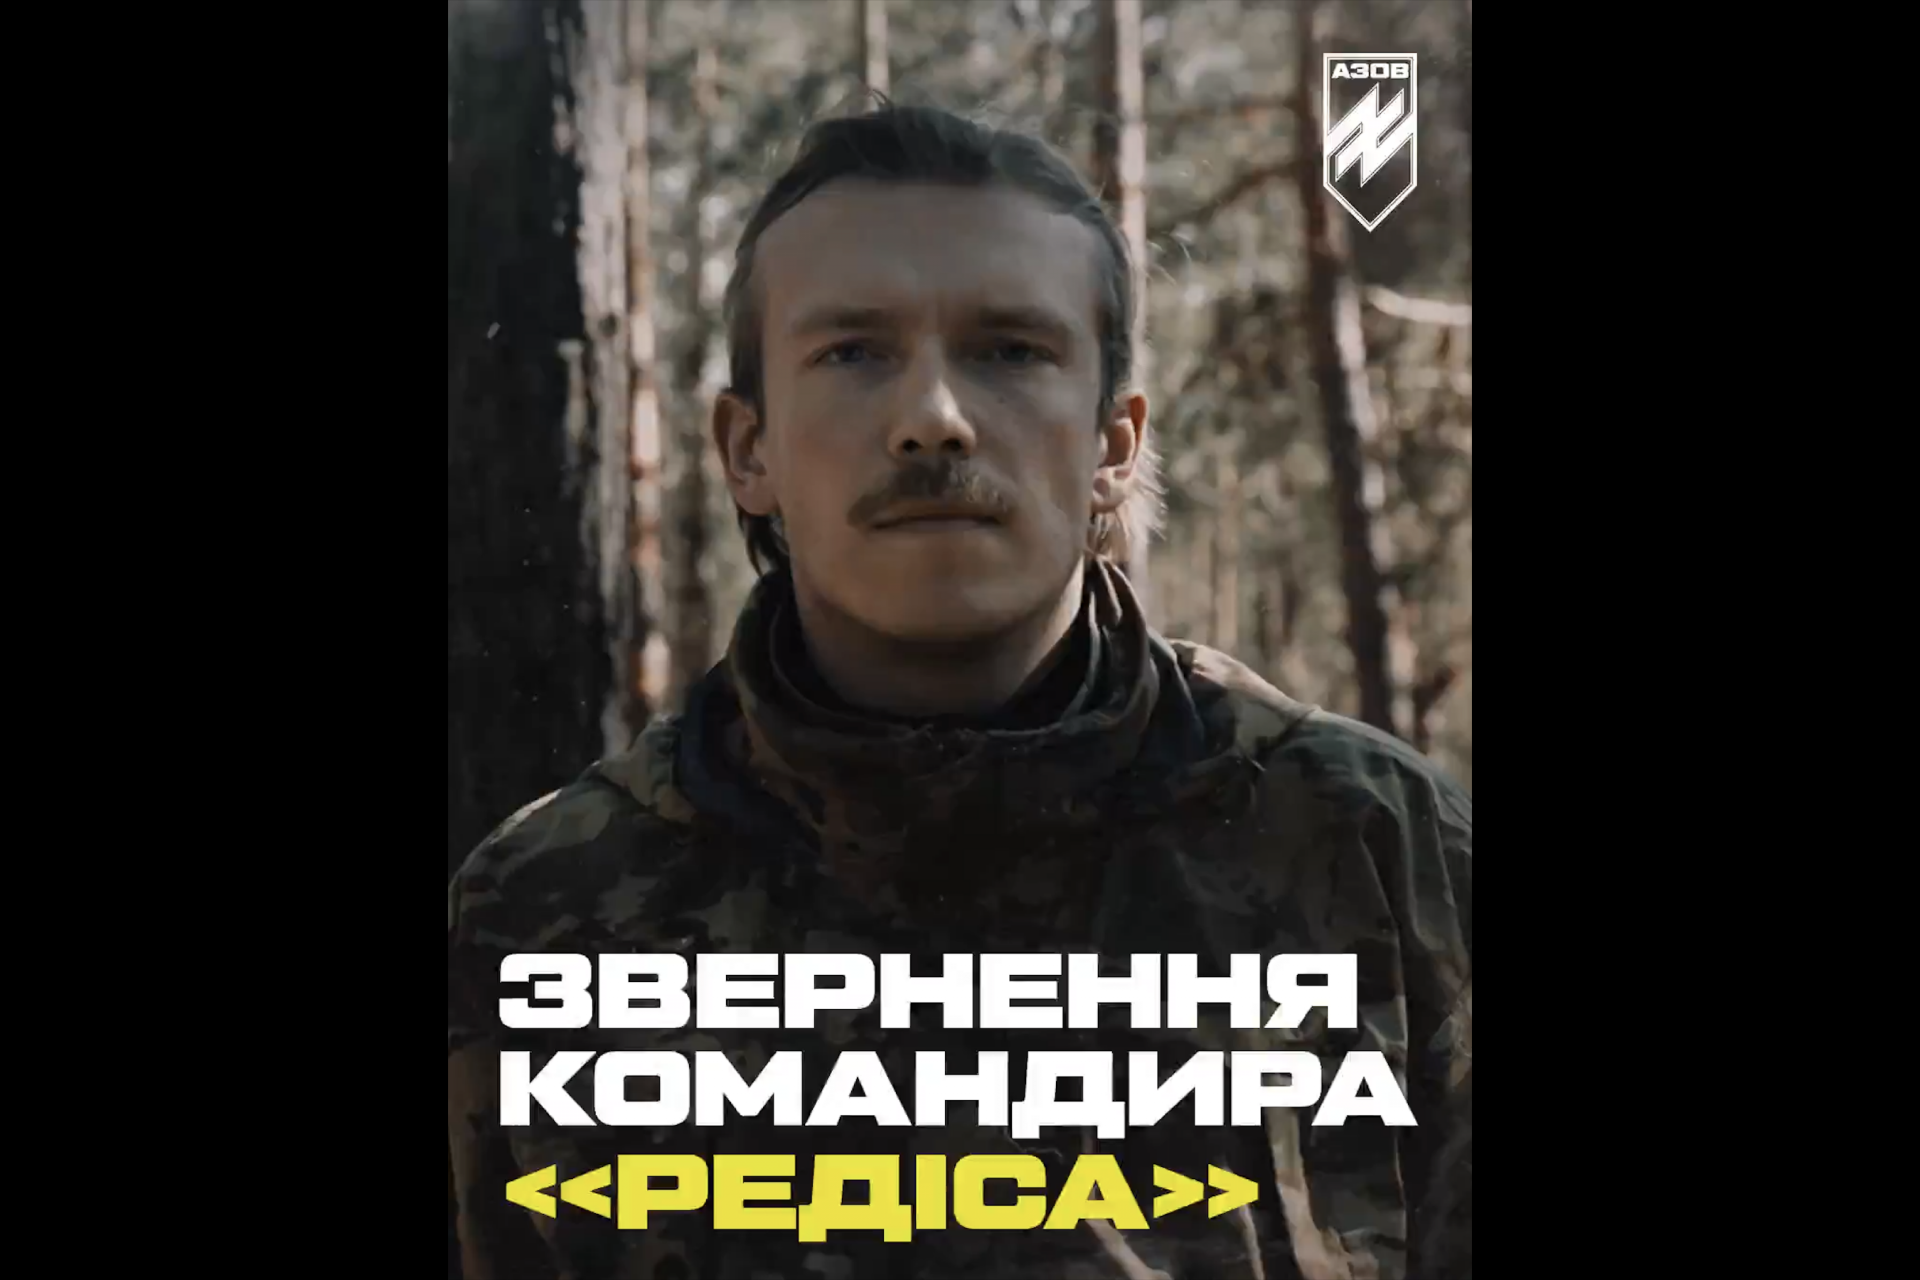 Congratulating the soldiers of Azov 